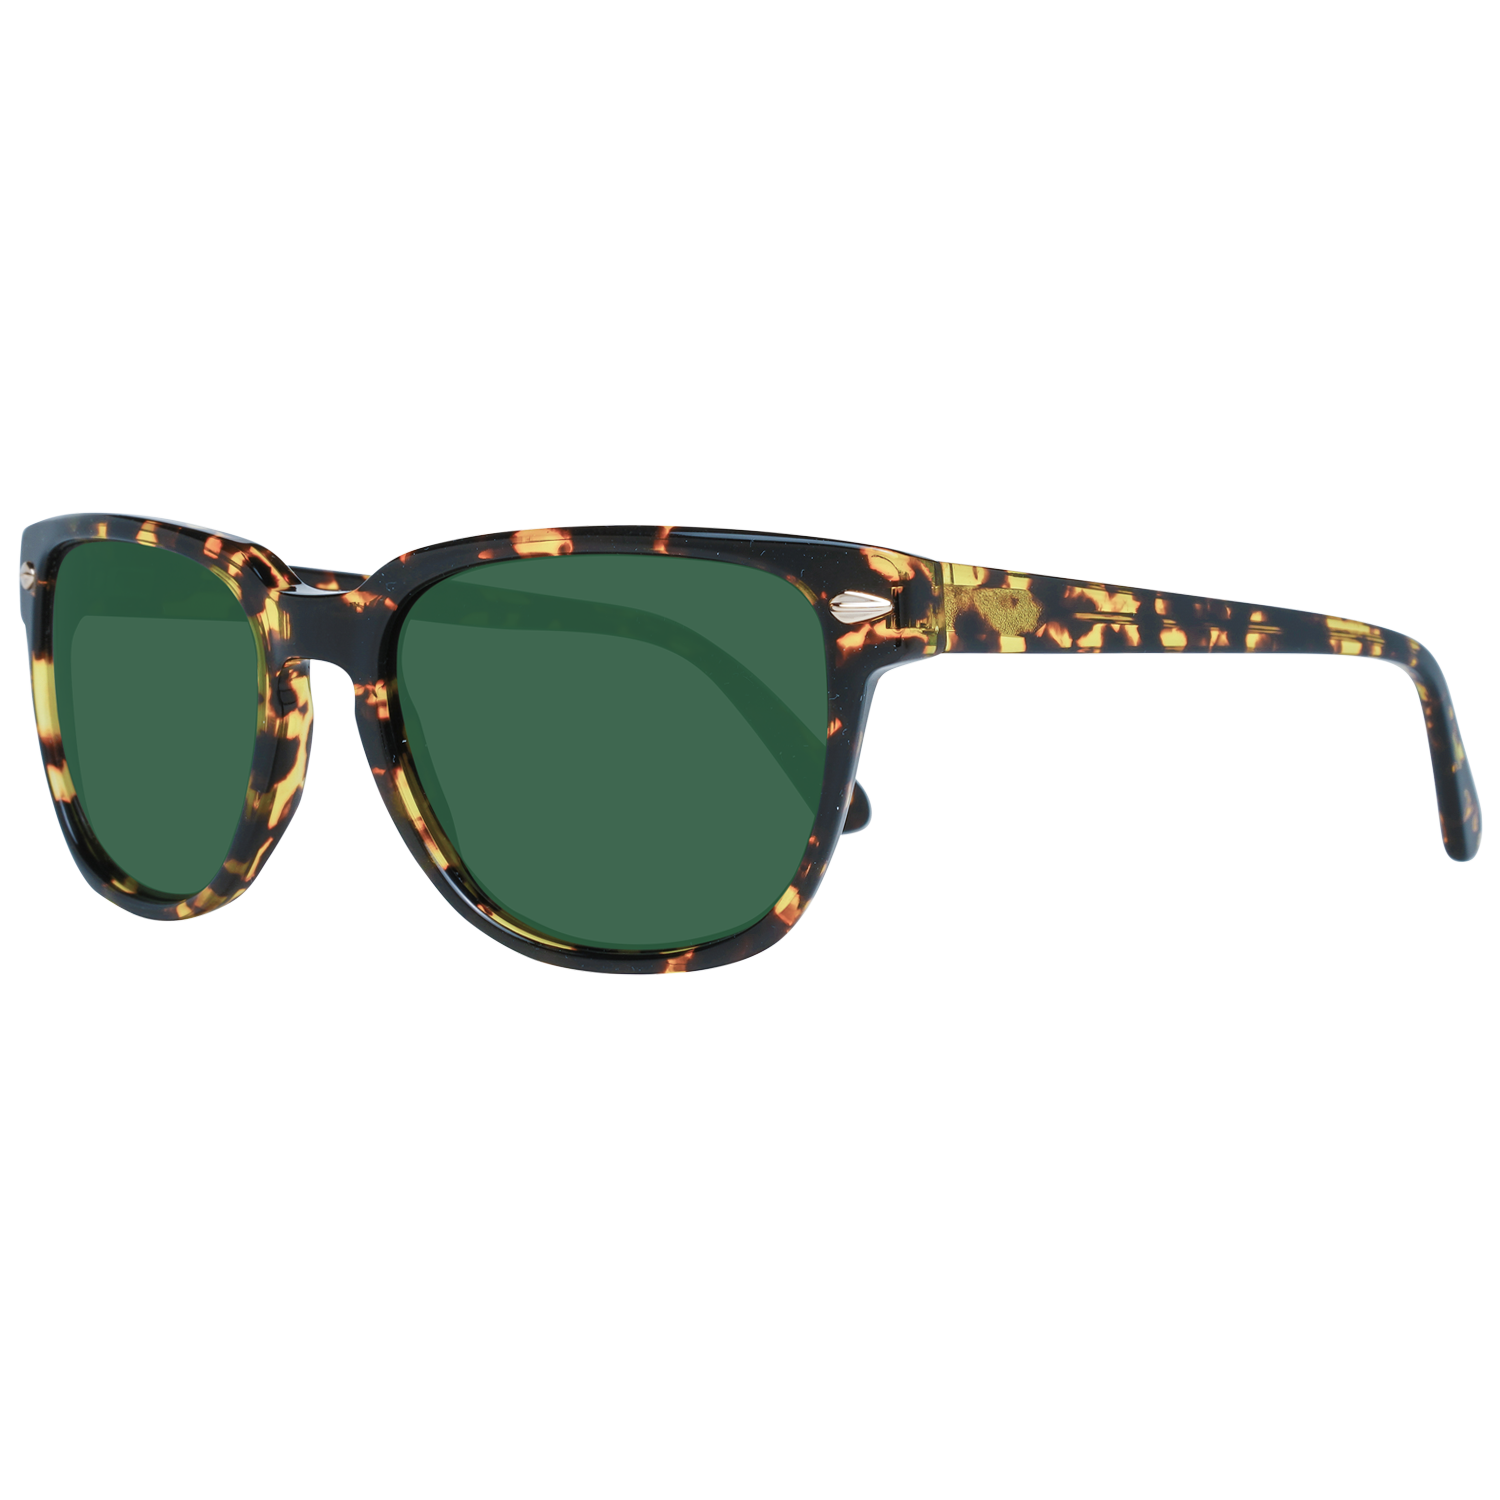 Zac Posen Sunglasses Zac Posen Sunglasses ZDAA YT 55 Daan Eyeglasses Eyewear UK USA Australia 